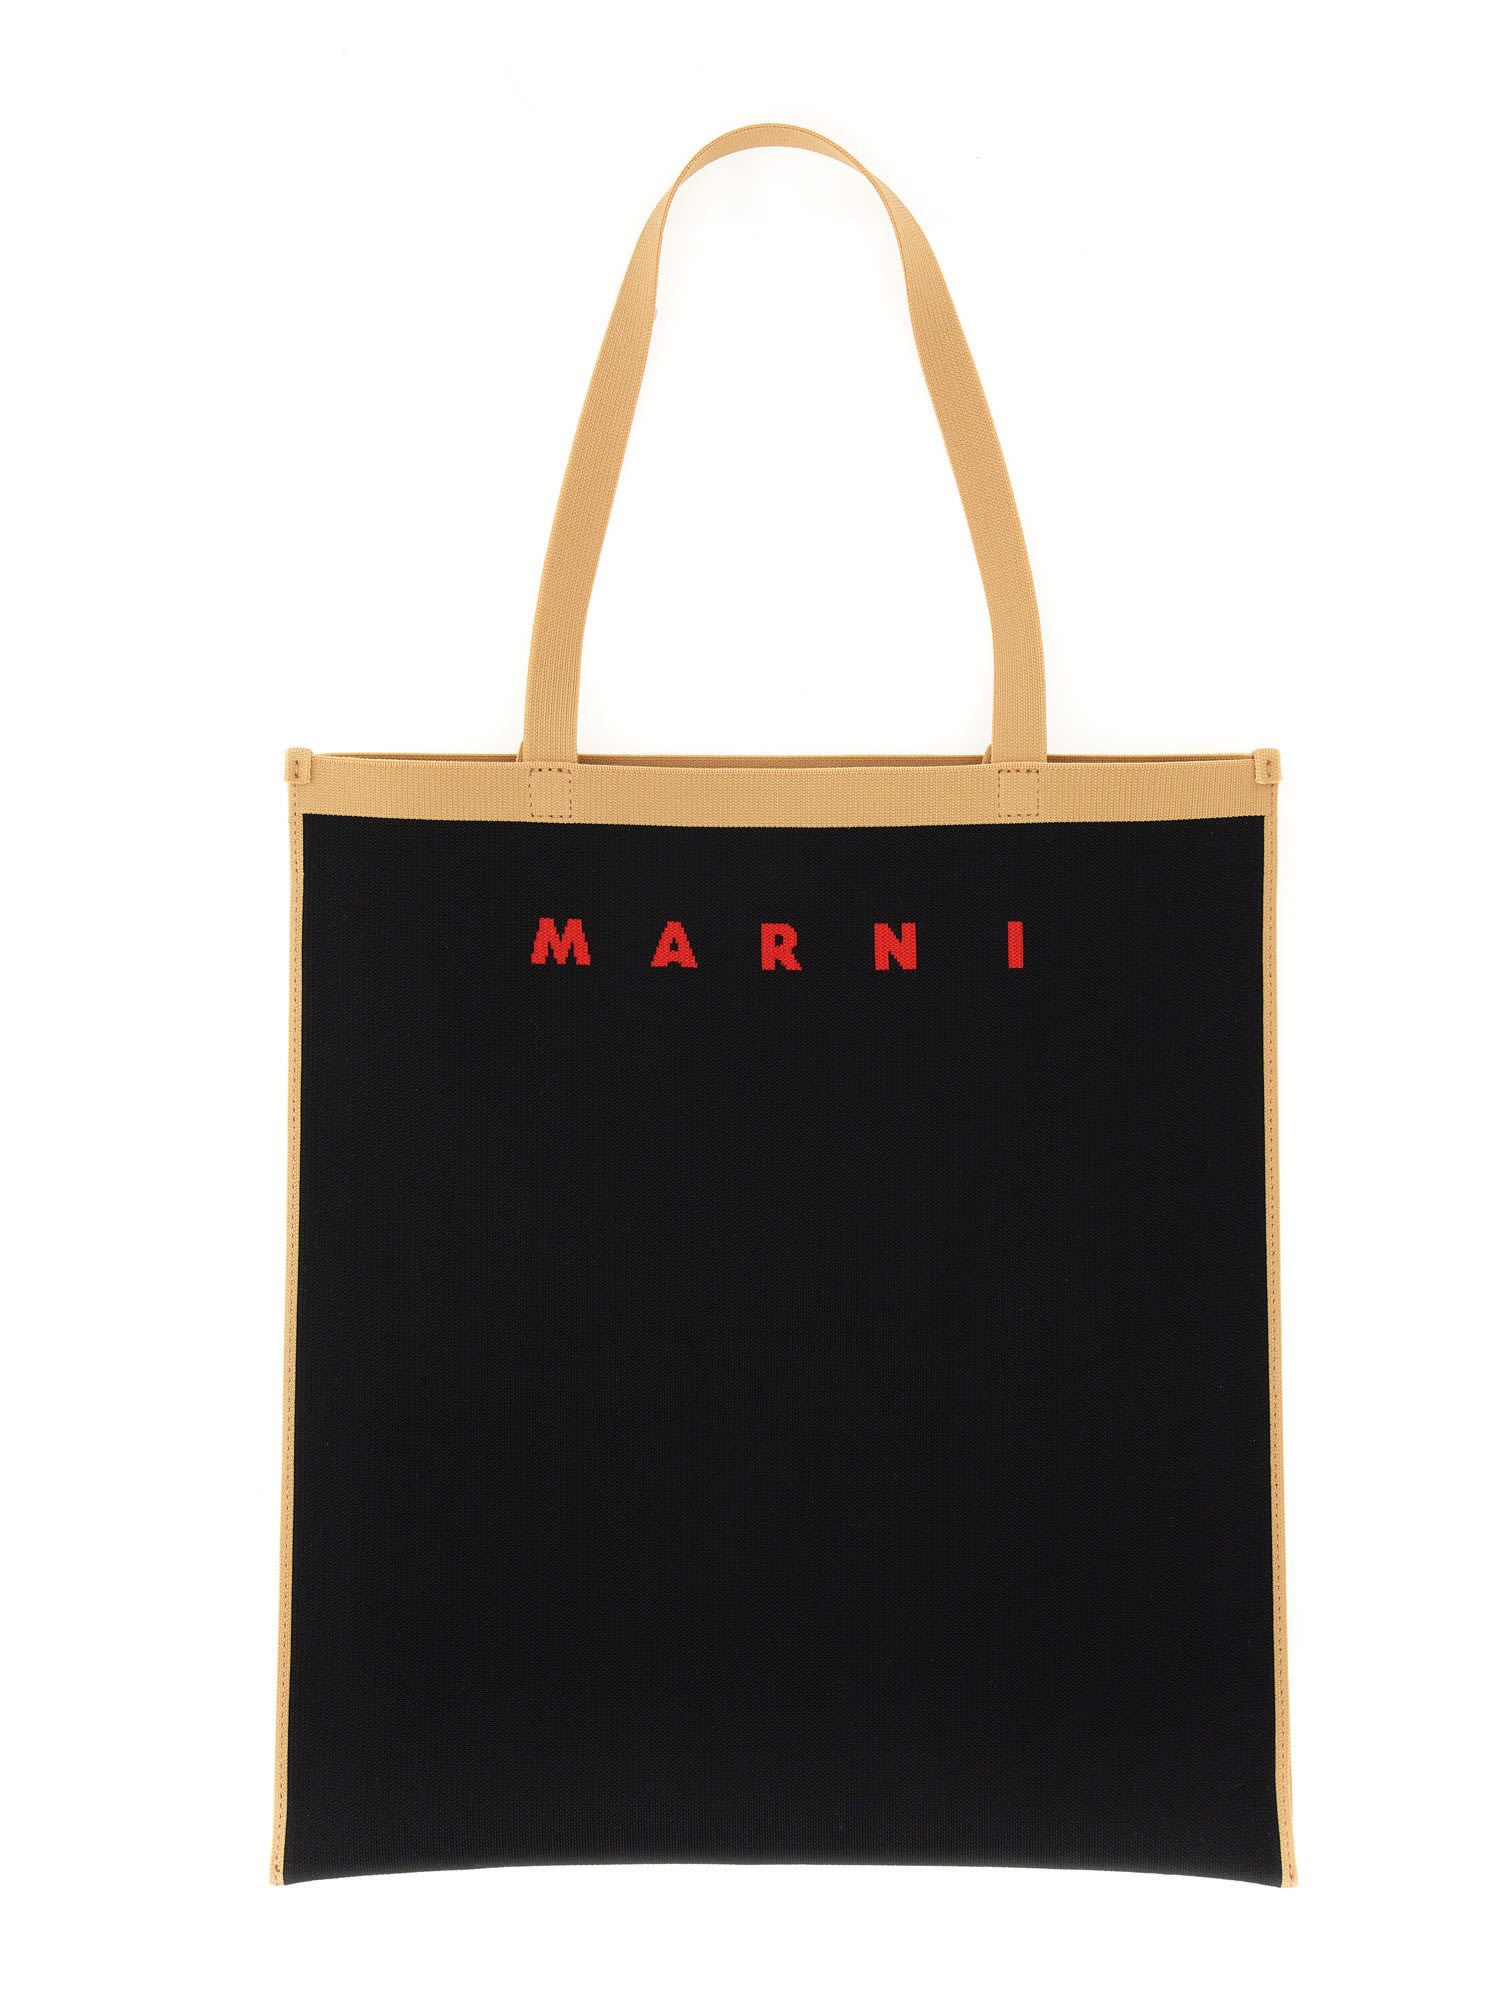 Marni Flat Tote Bag